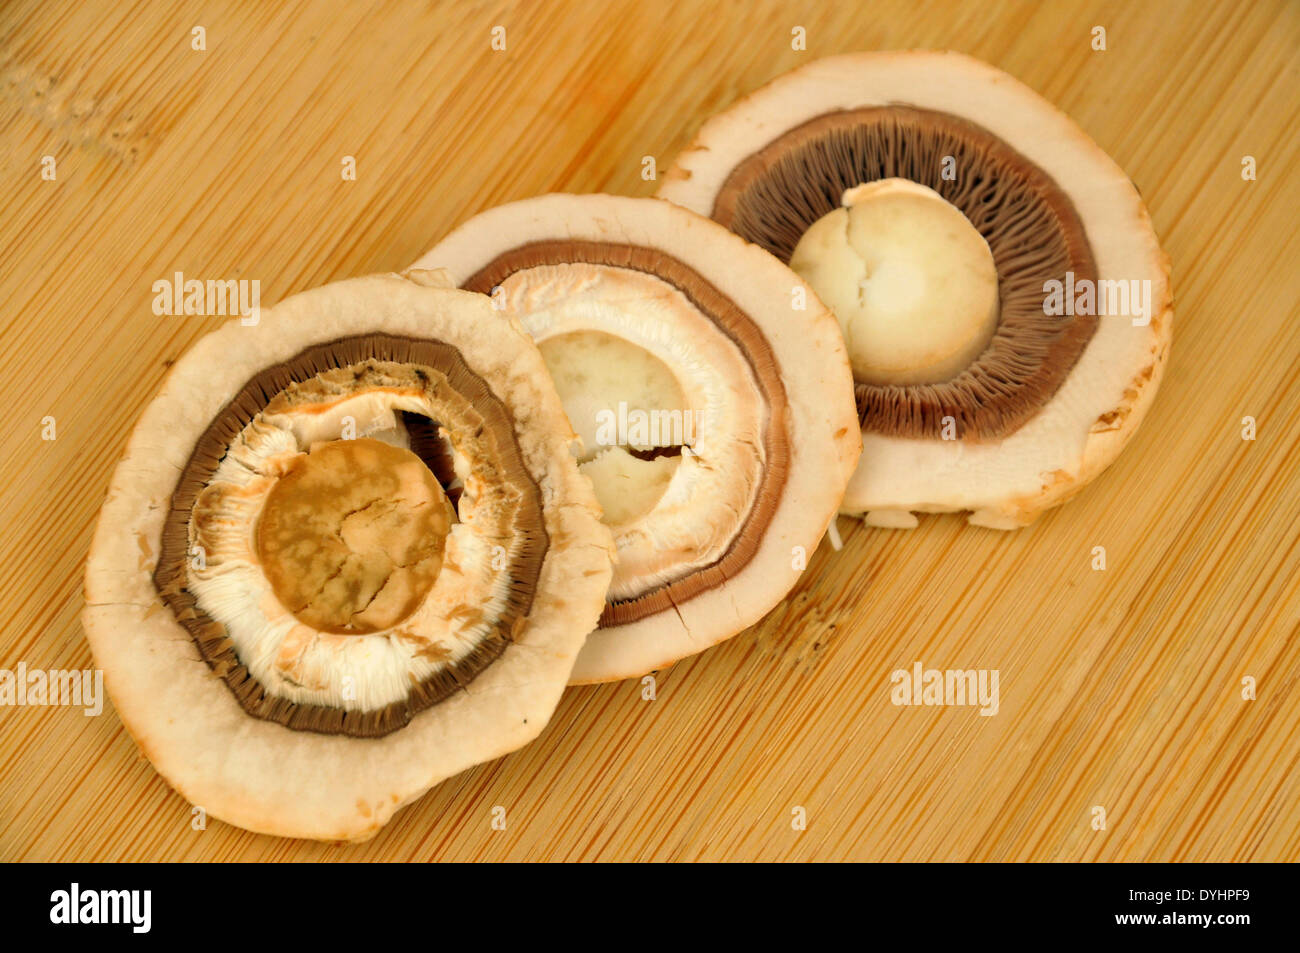 Fresh Button Mushrooms Sliced Three Ways on Wooden Board Stock Photo